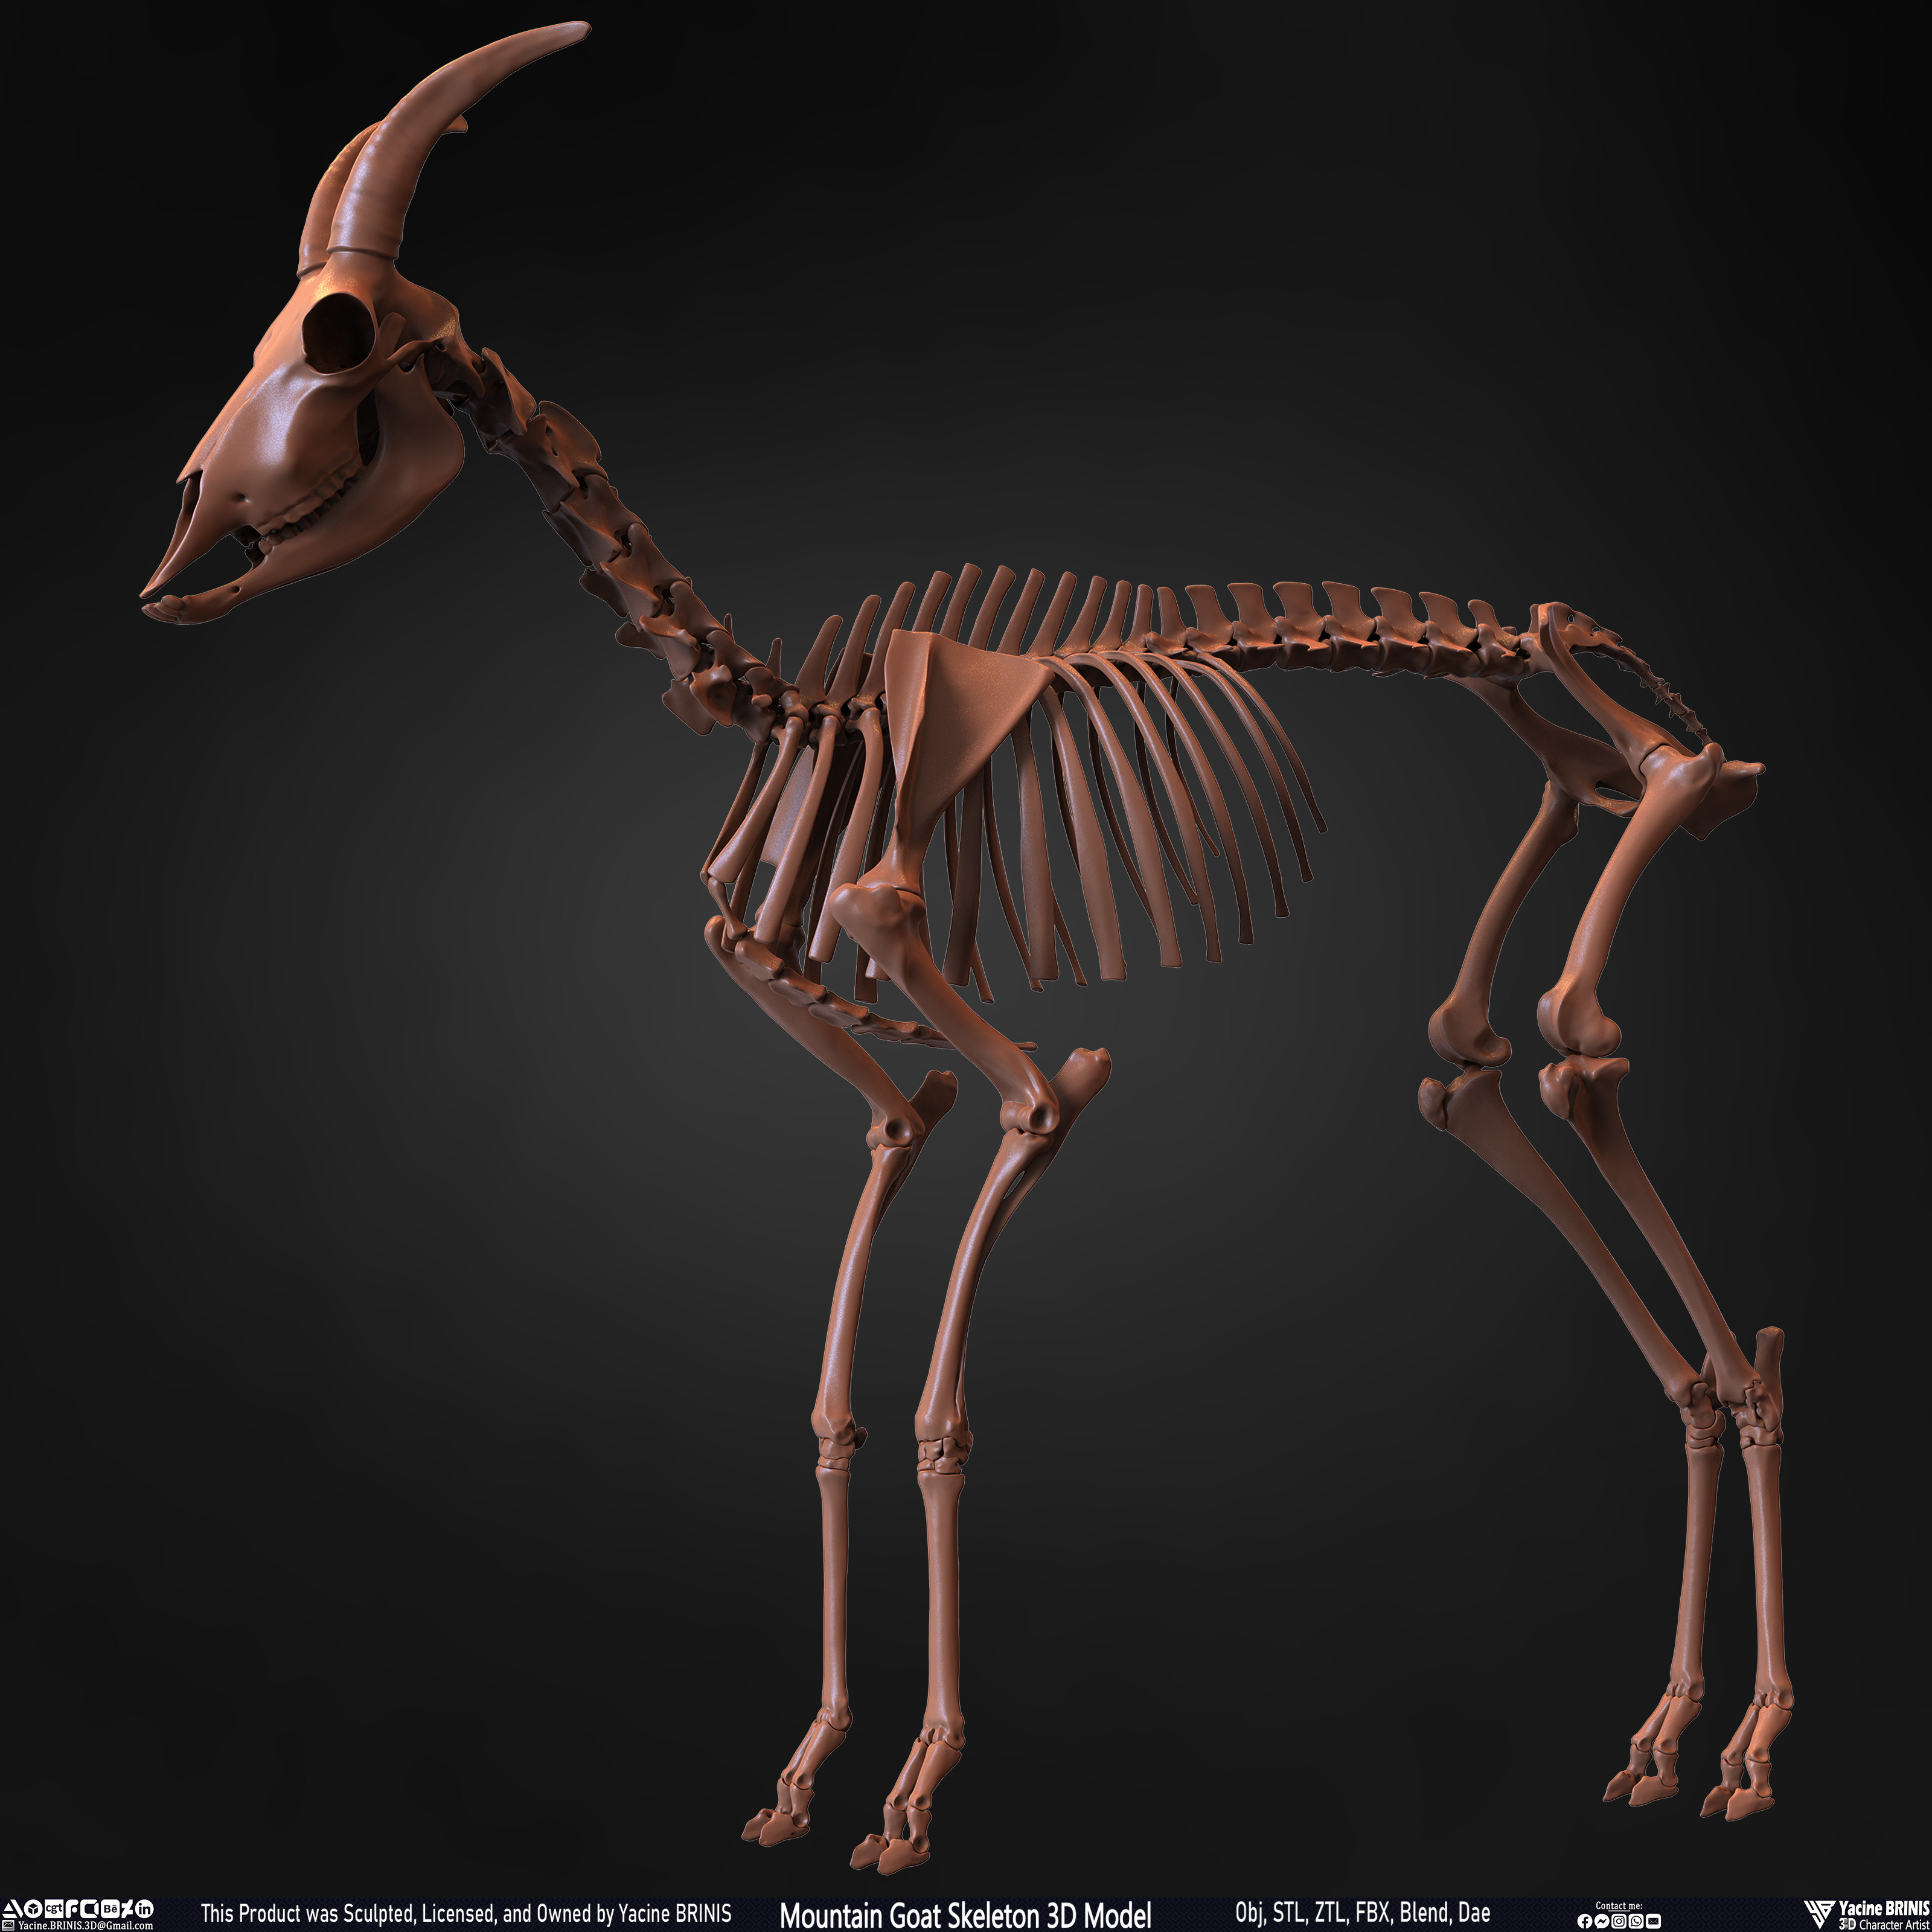 Mountain Goat Skeleton 3D Model Sculpted by Yacine BRINIS Set 010